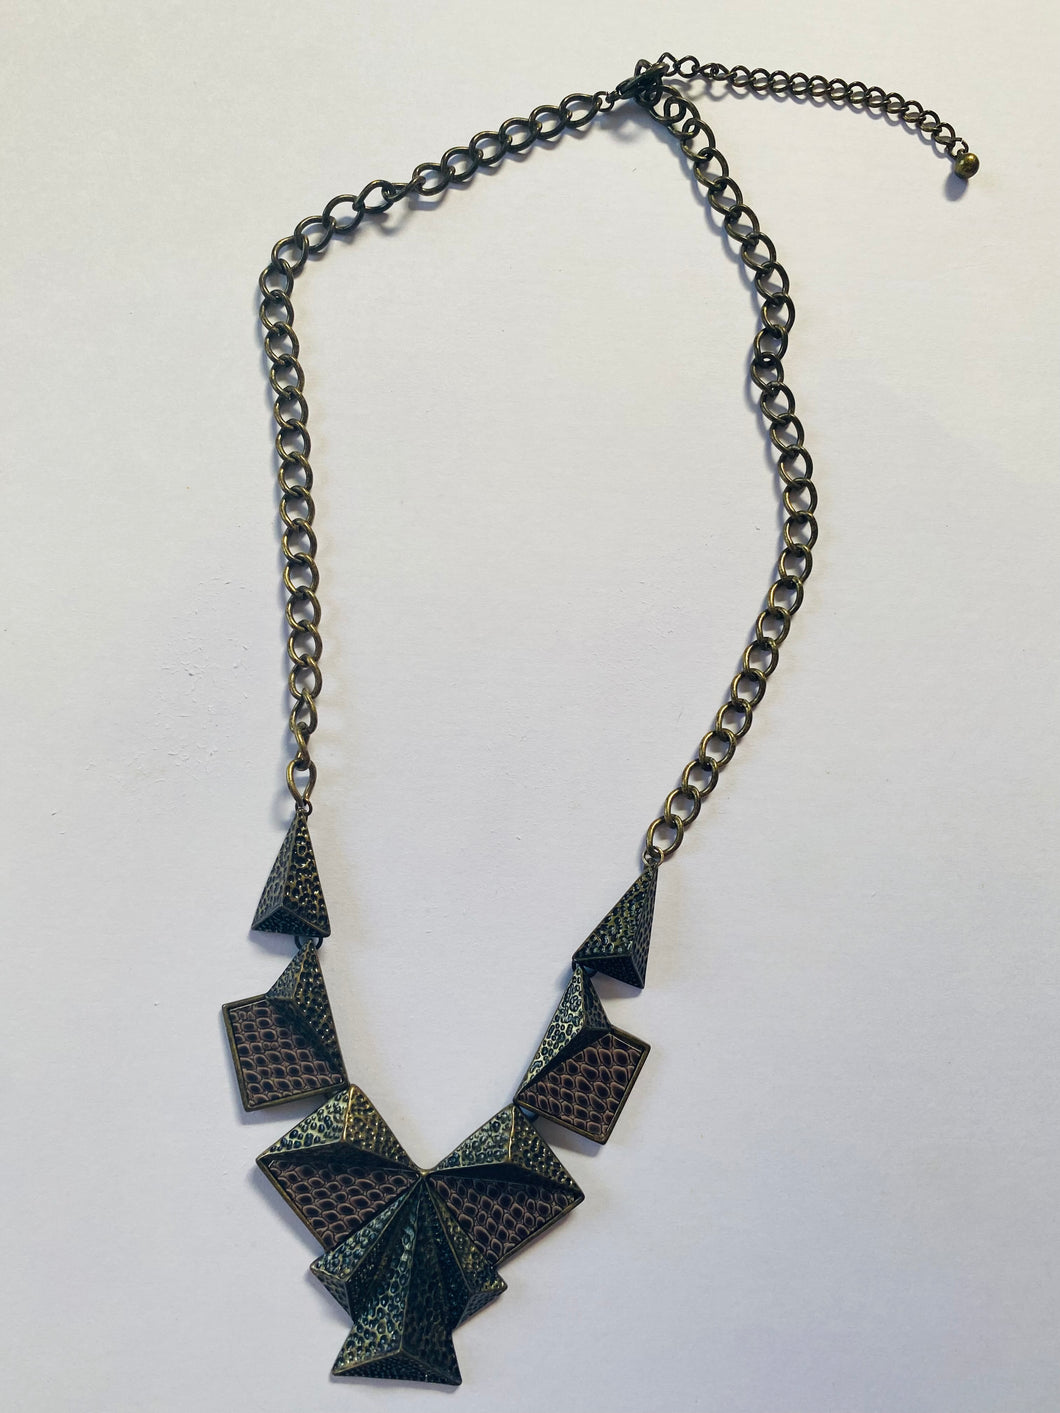 Engraved Reptilian Warrior Necklace